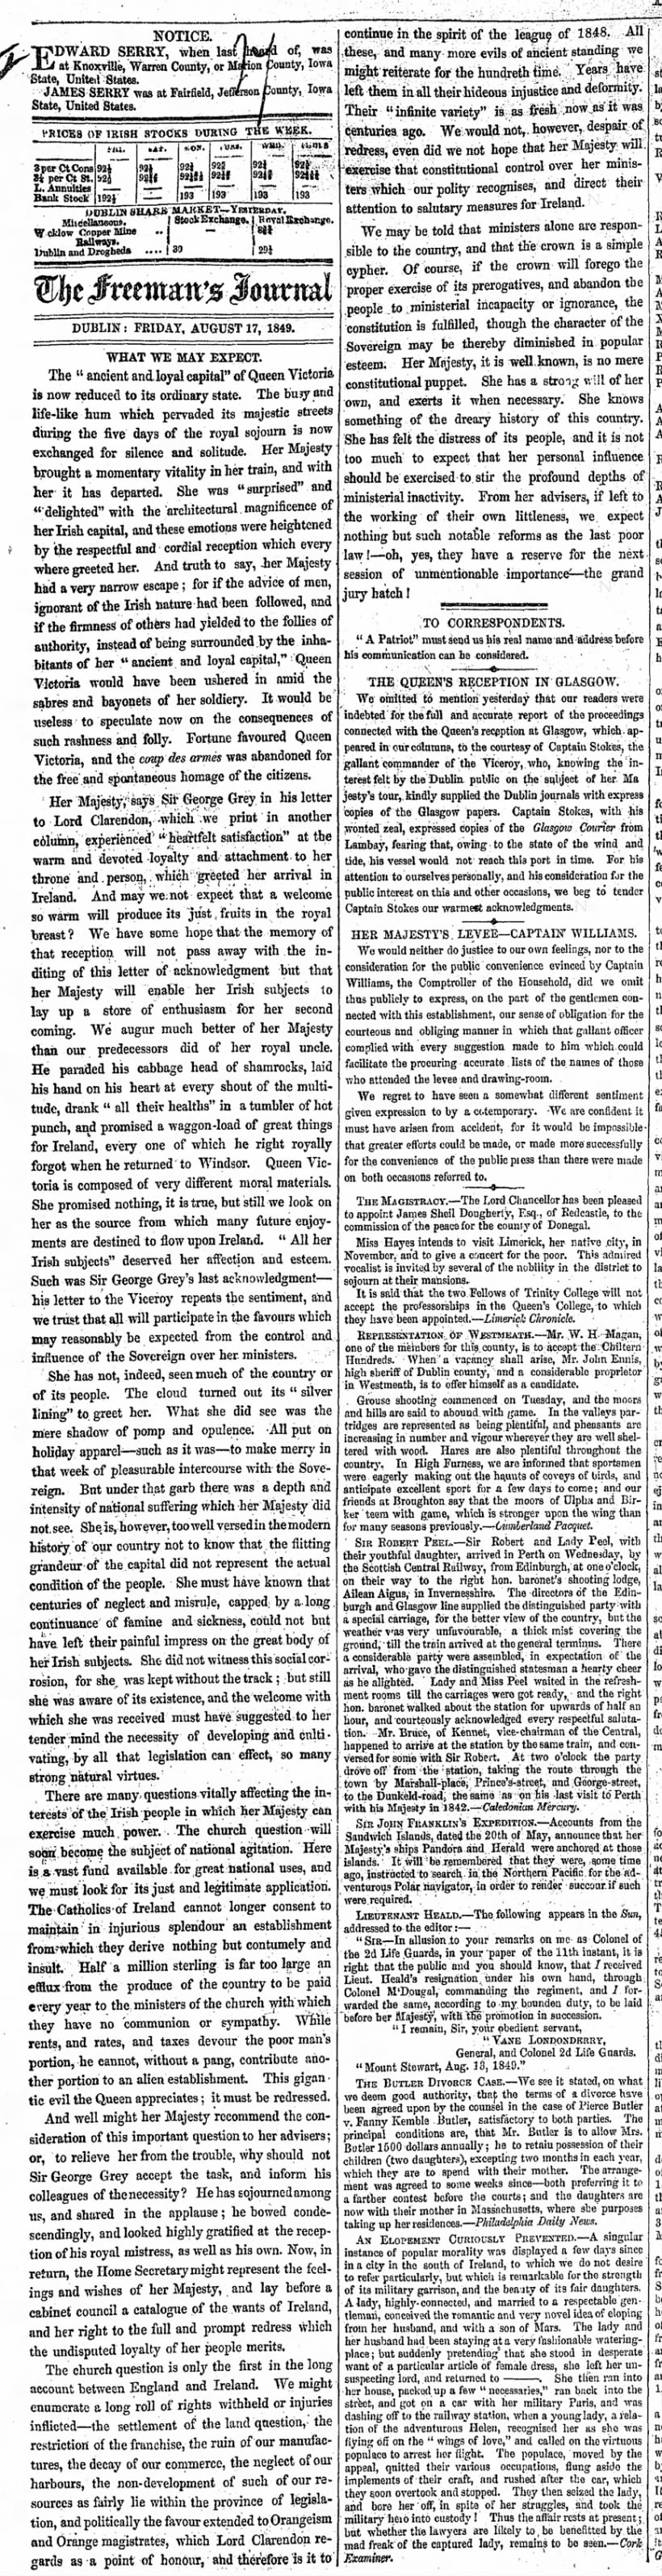 Editorial in Irish newspaper about Queen Victoria's visit to Ireland in 1849